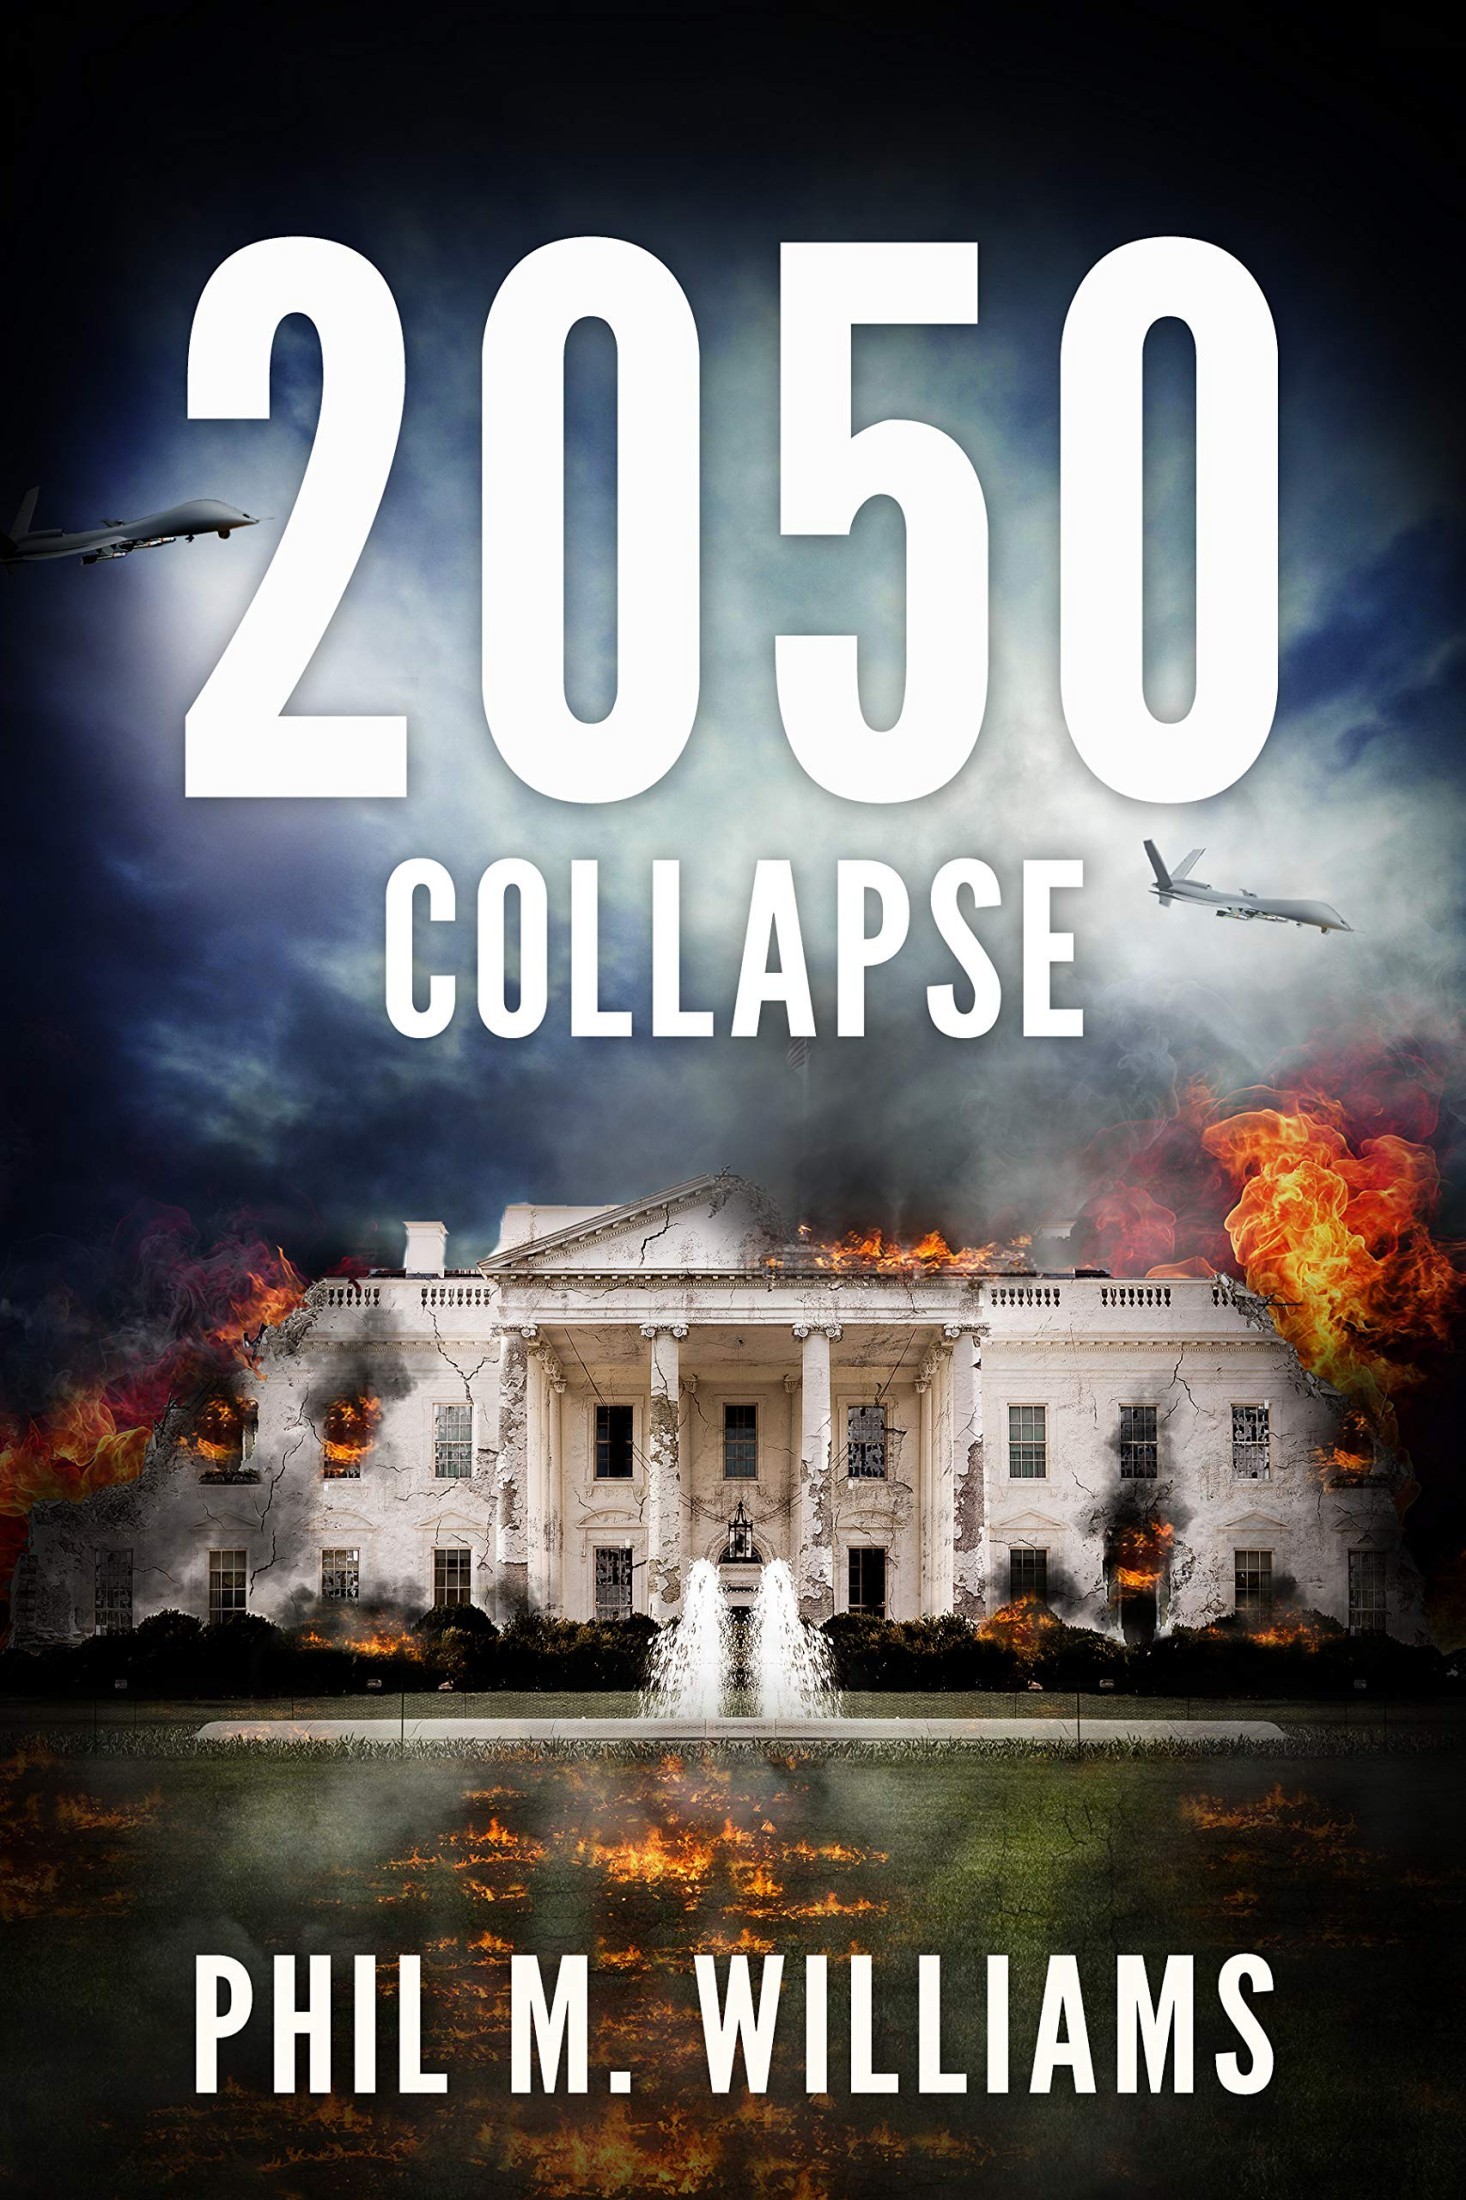 2050: Collapse